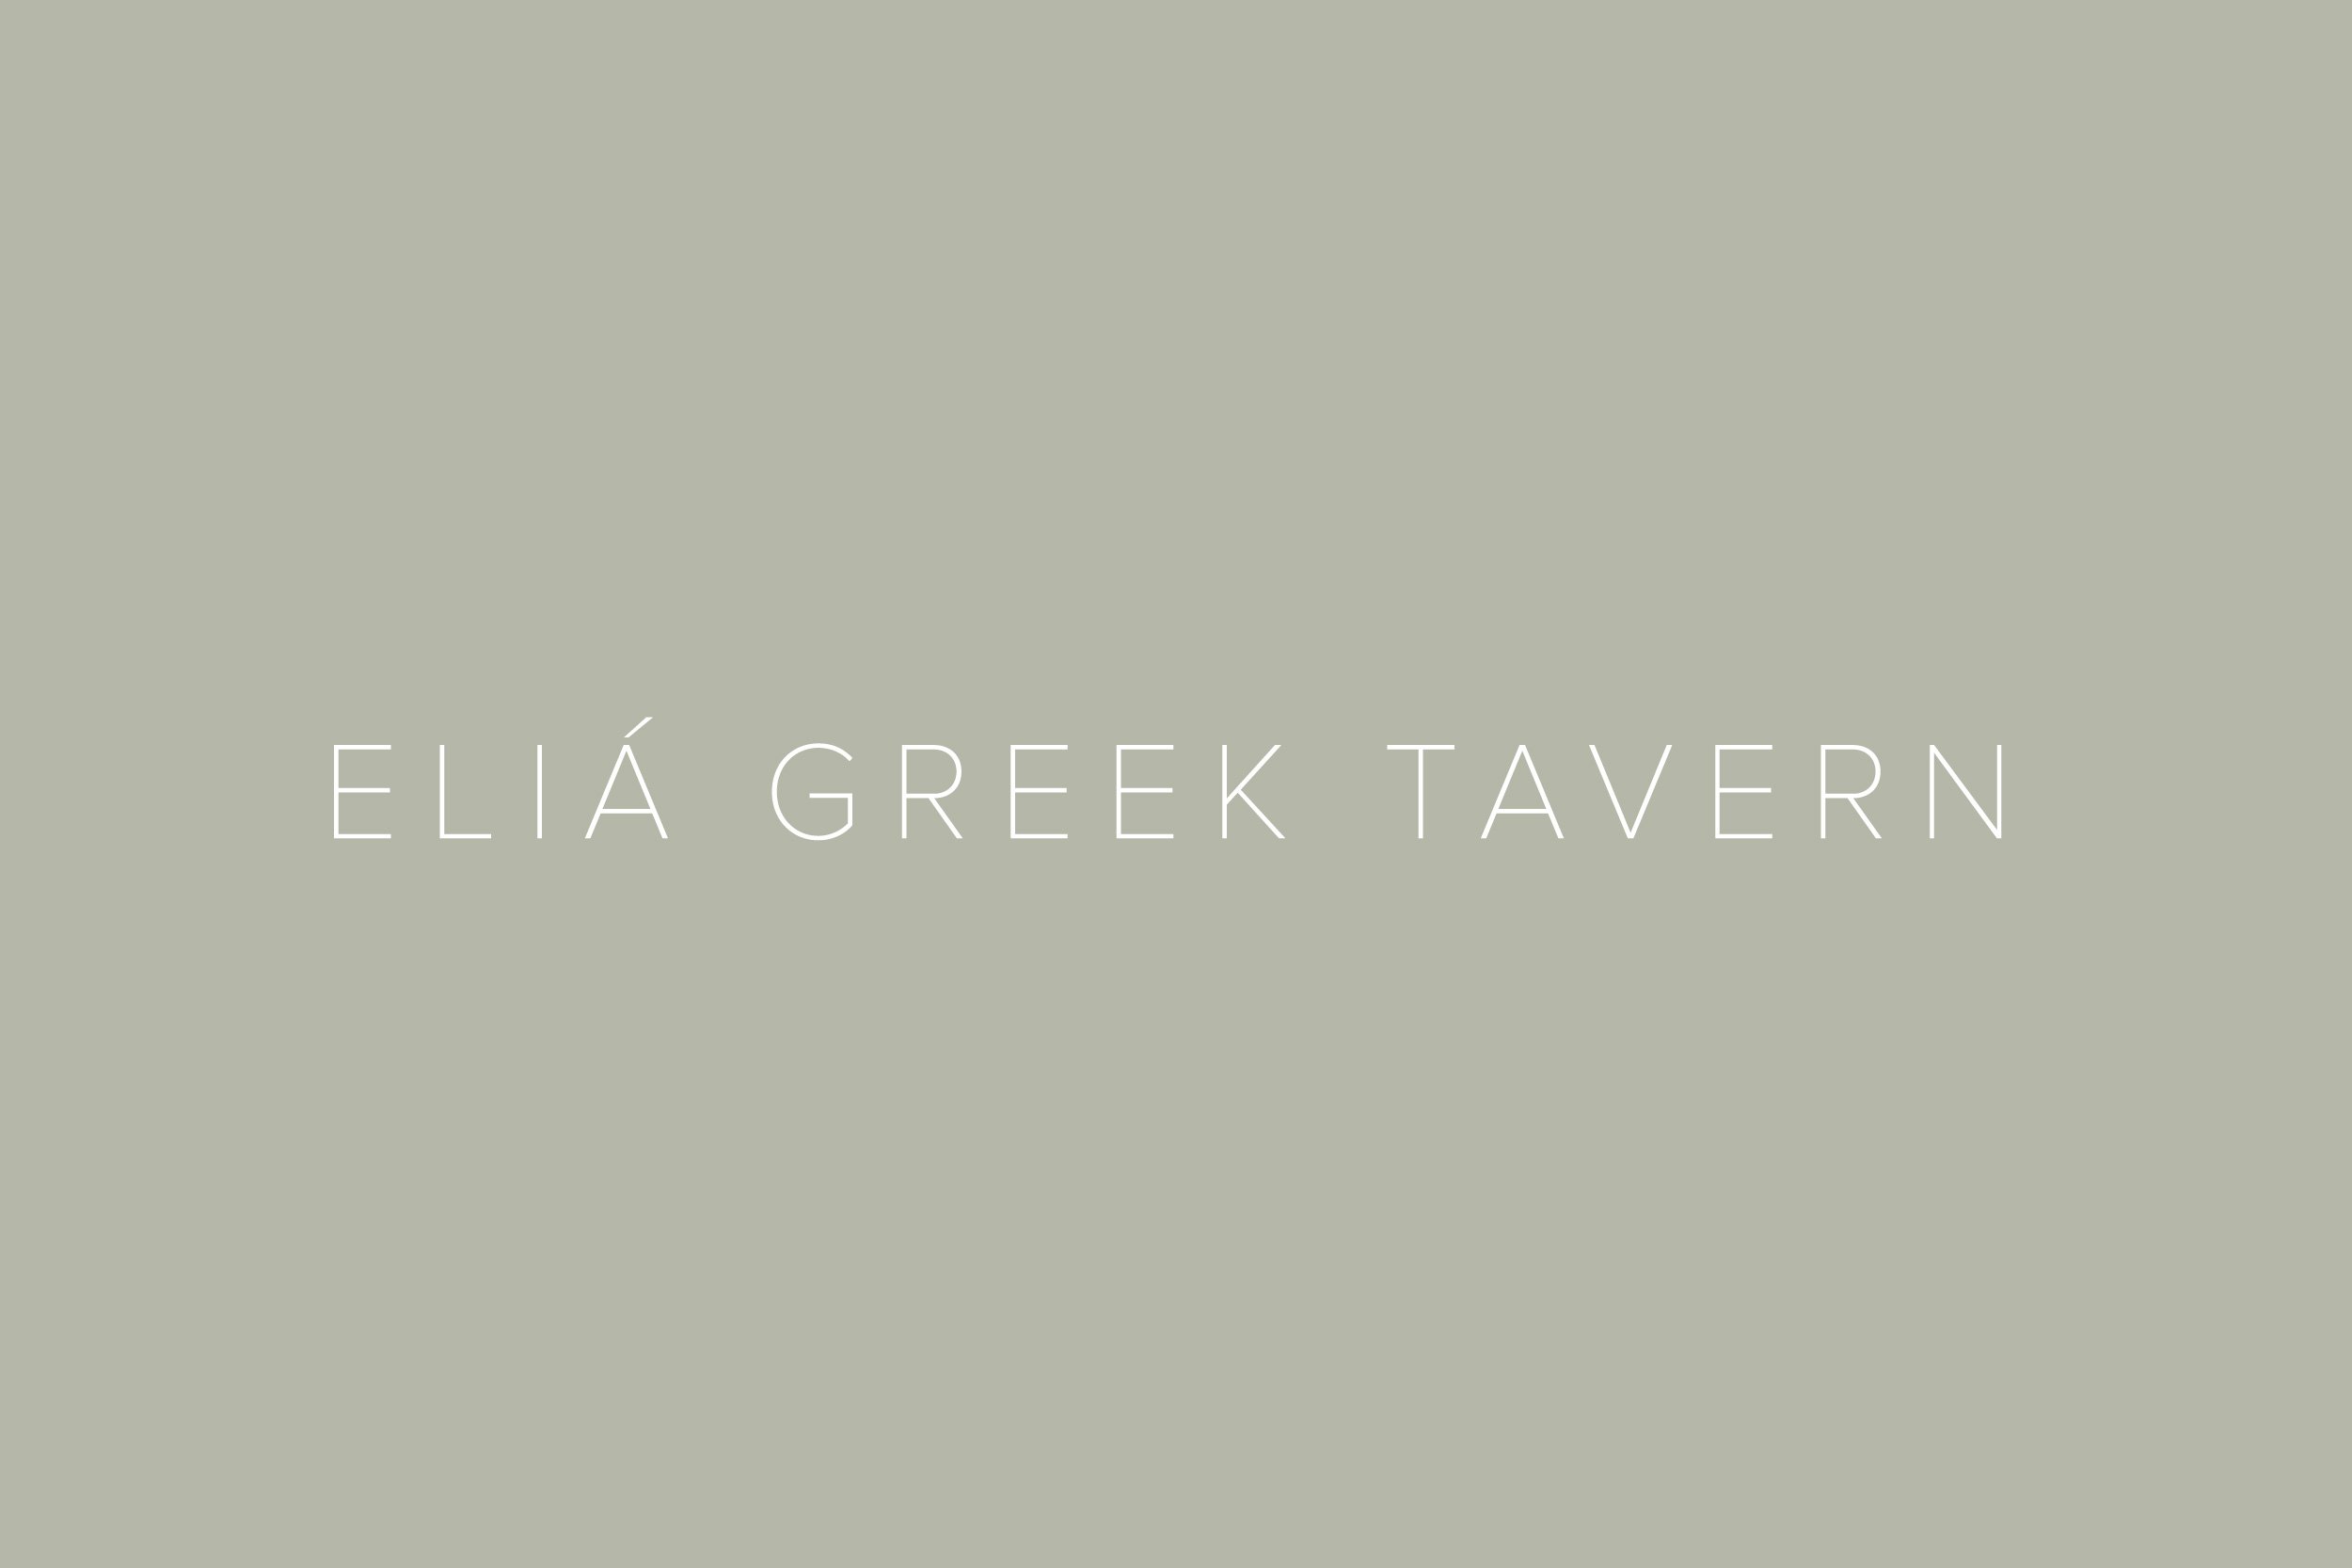 Elia-Greek-Tavern-Wordmark.jpg